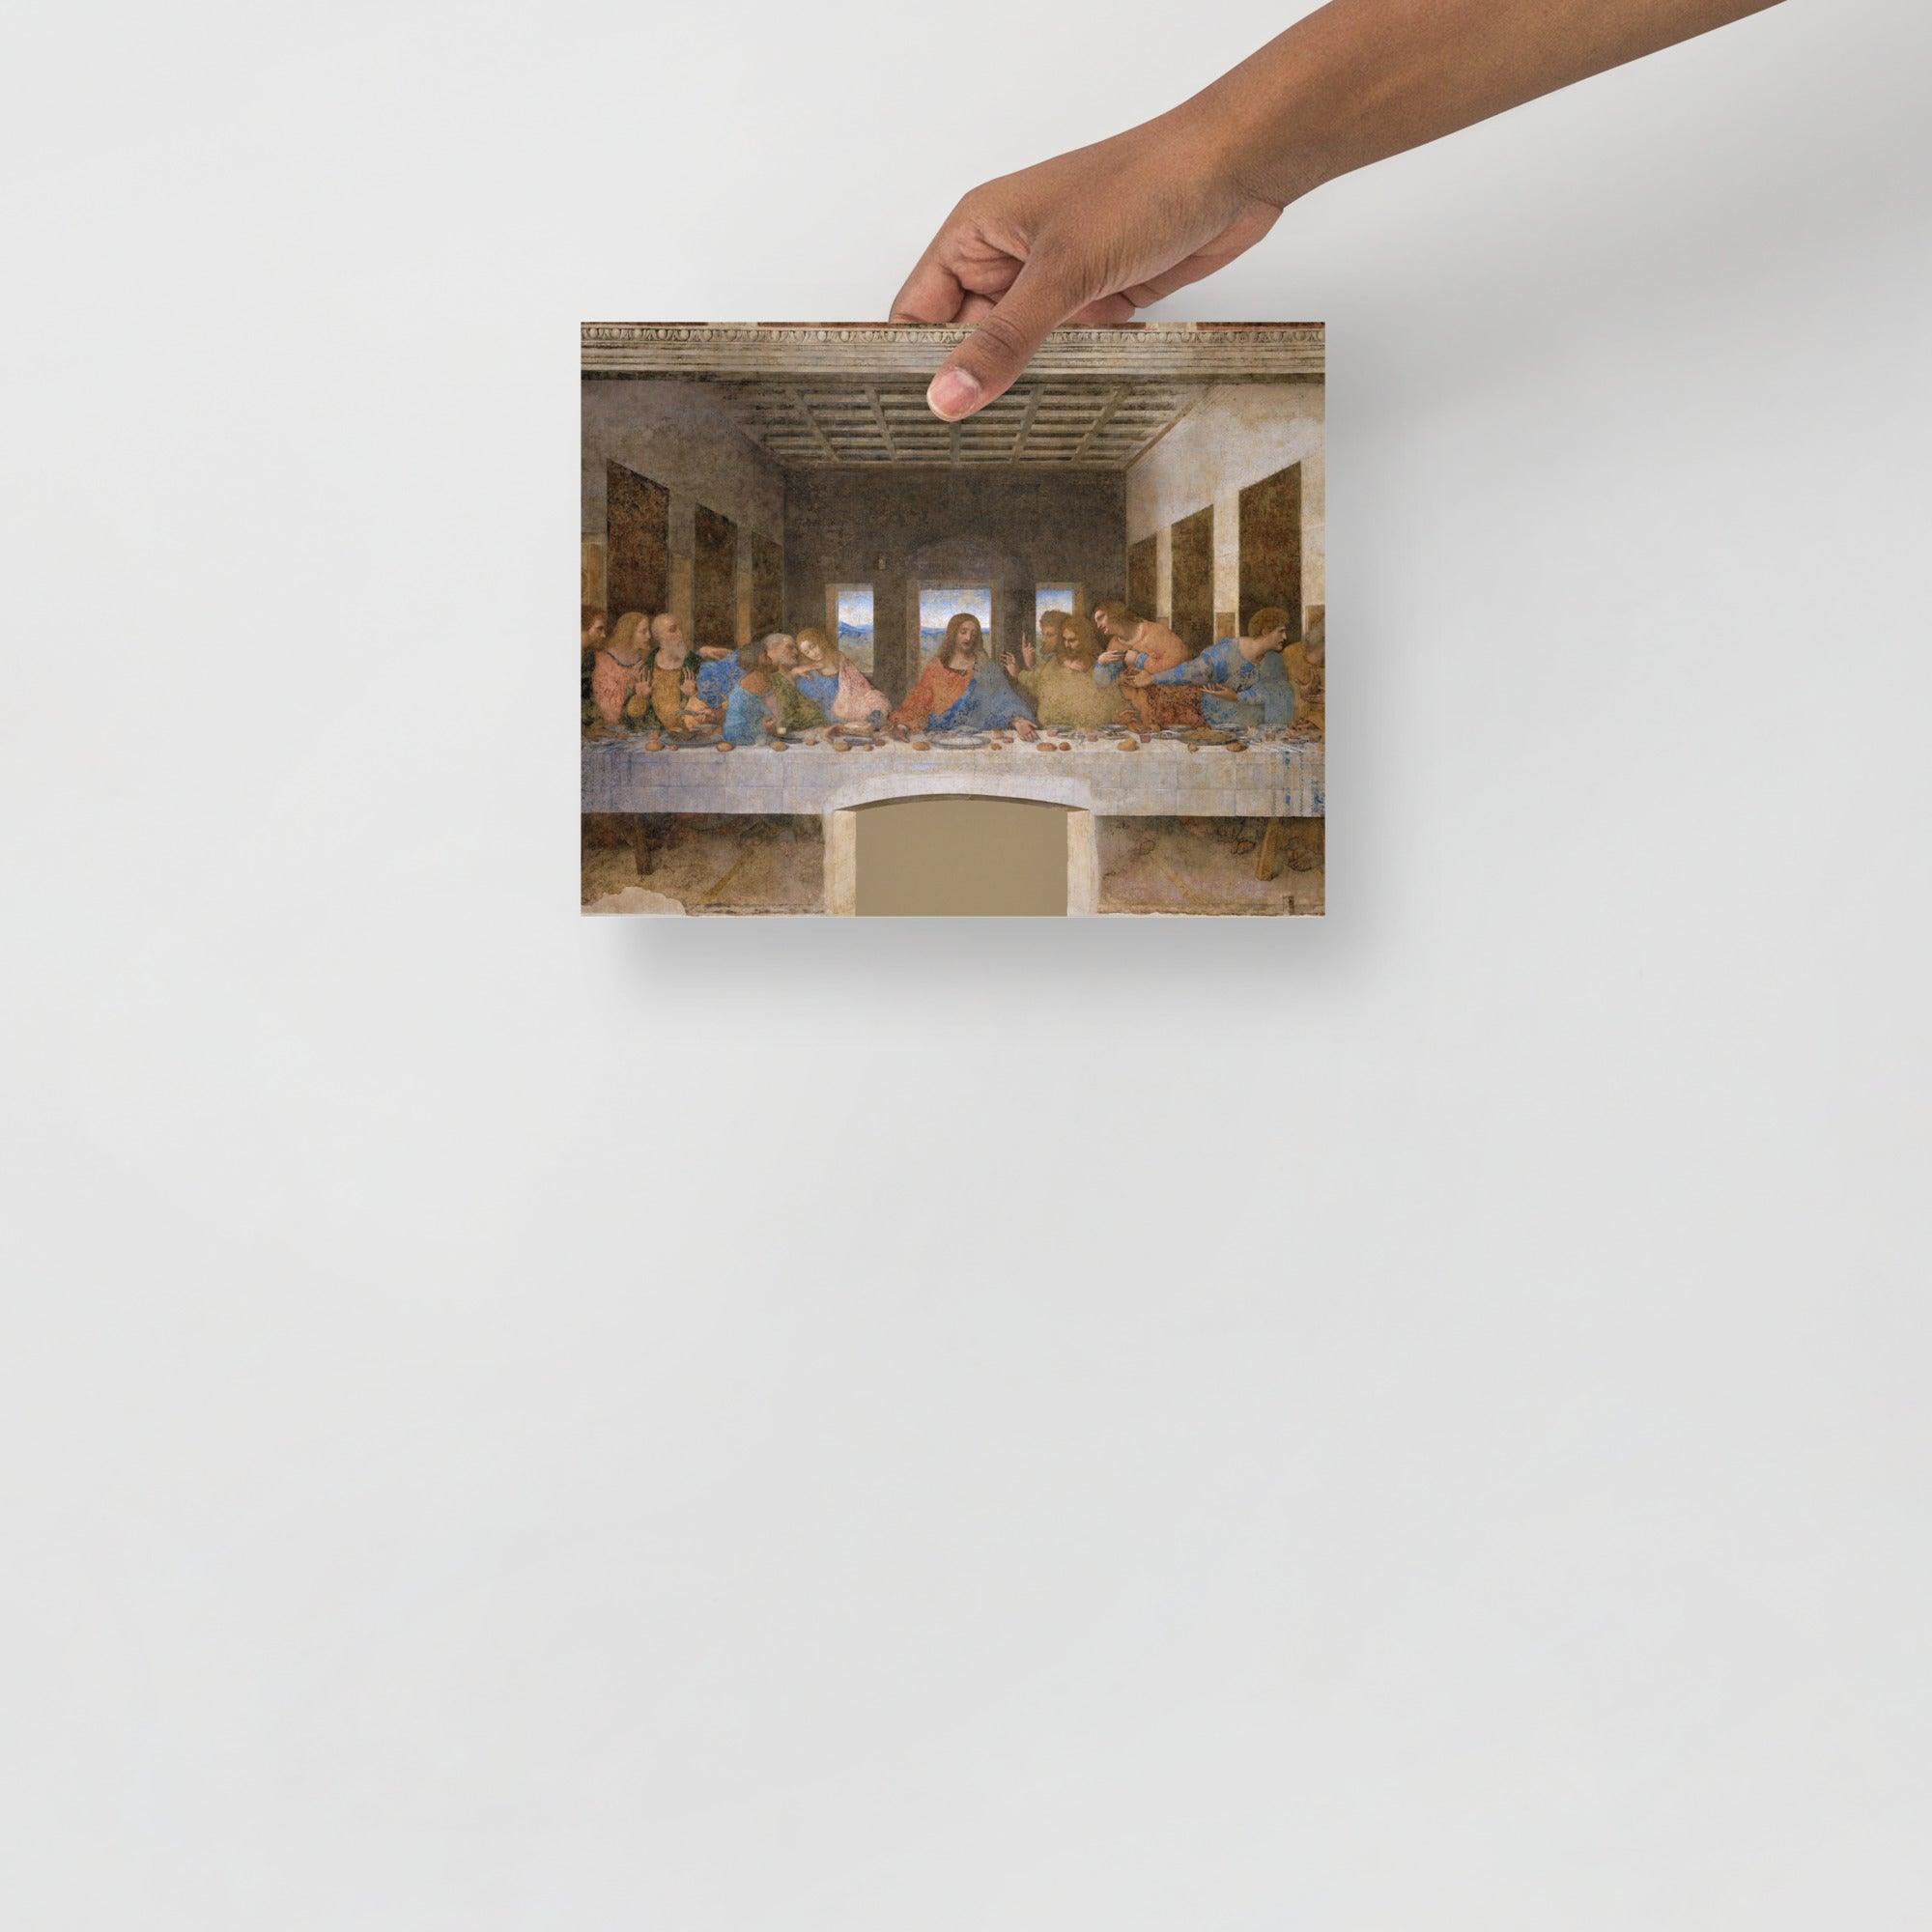 The Last Supper by Leonardo Da Vinci poster on a plain backdrop in size 8x10”.